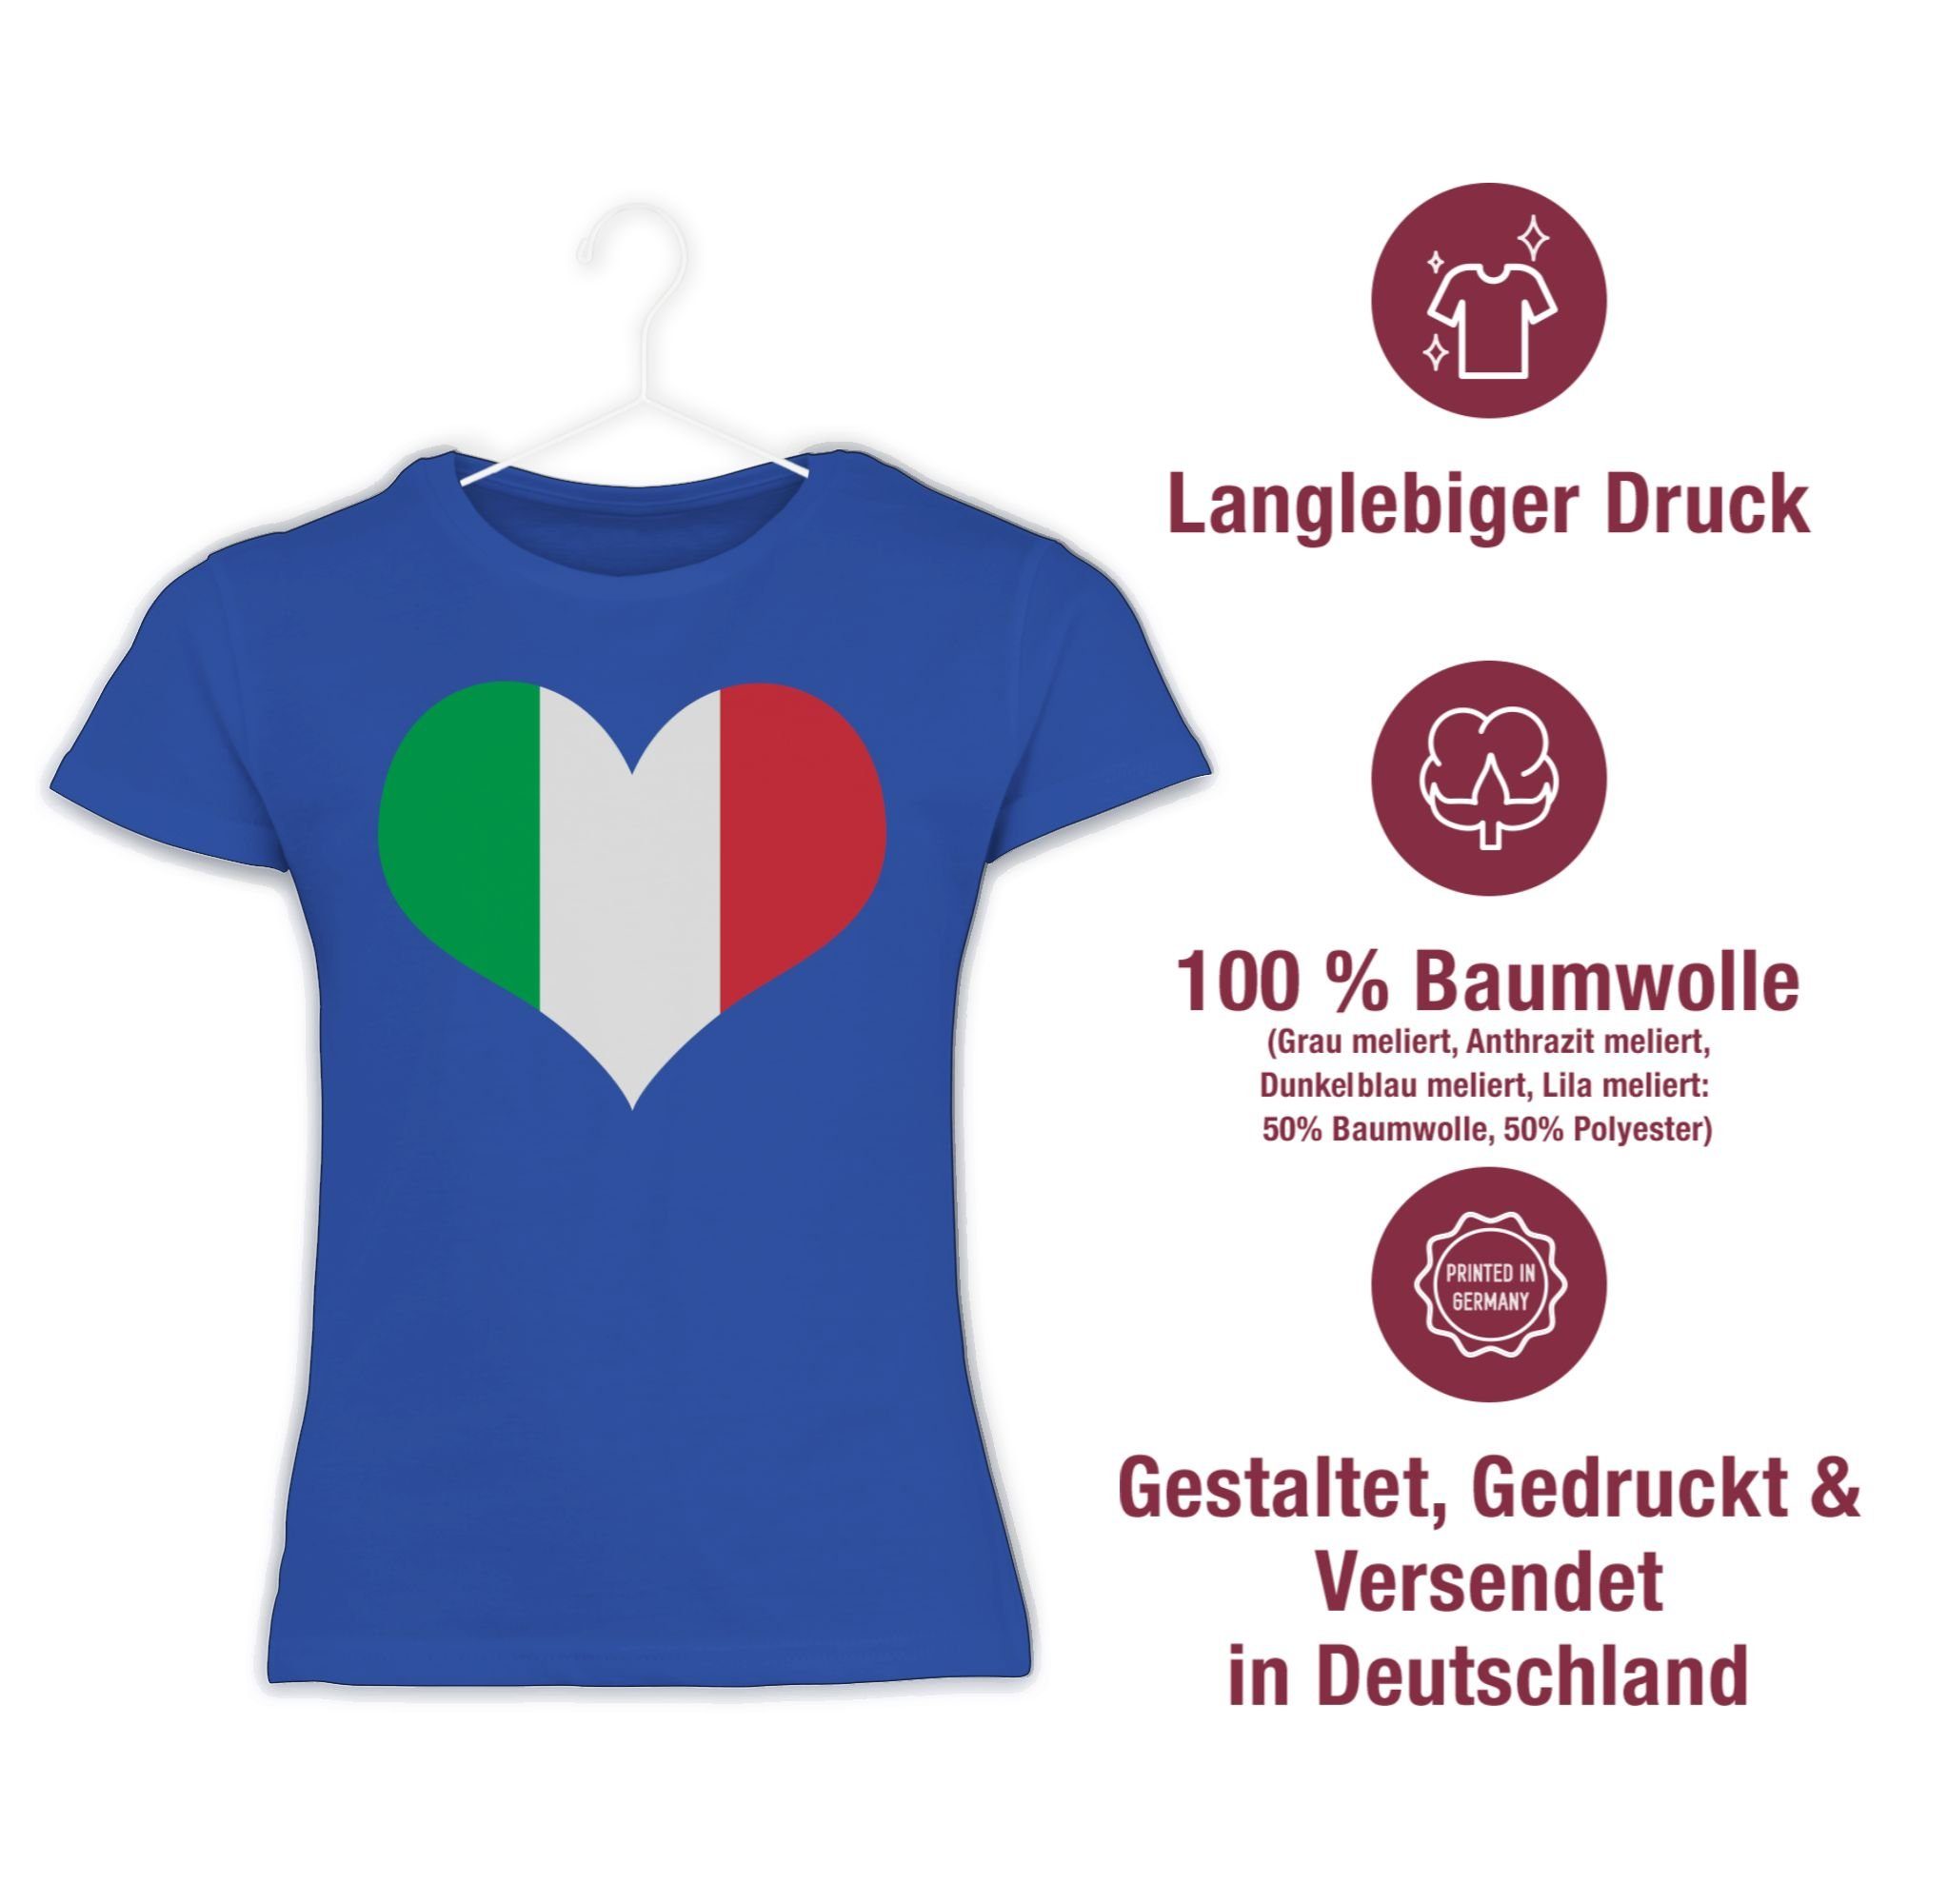 Herz Wappen Länder T-Shirt Kinder Italien Shirtracer Royalblau 1